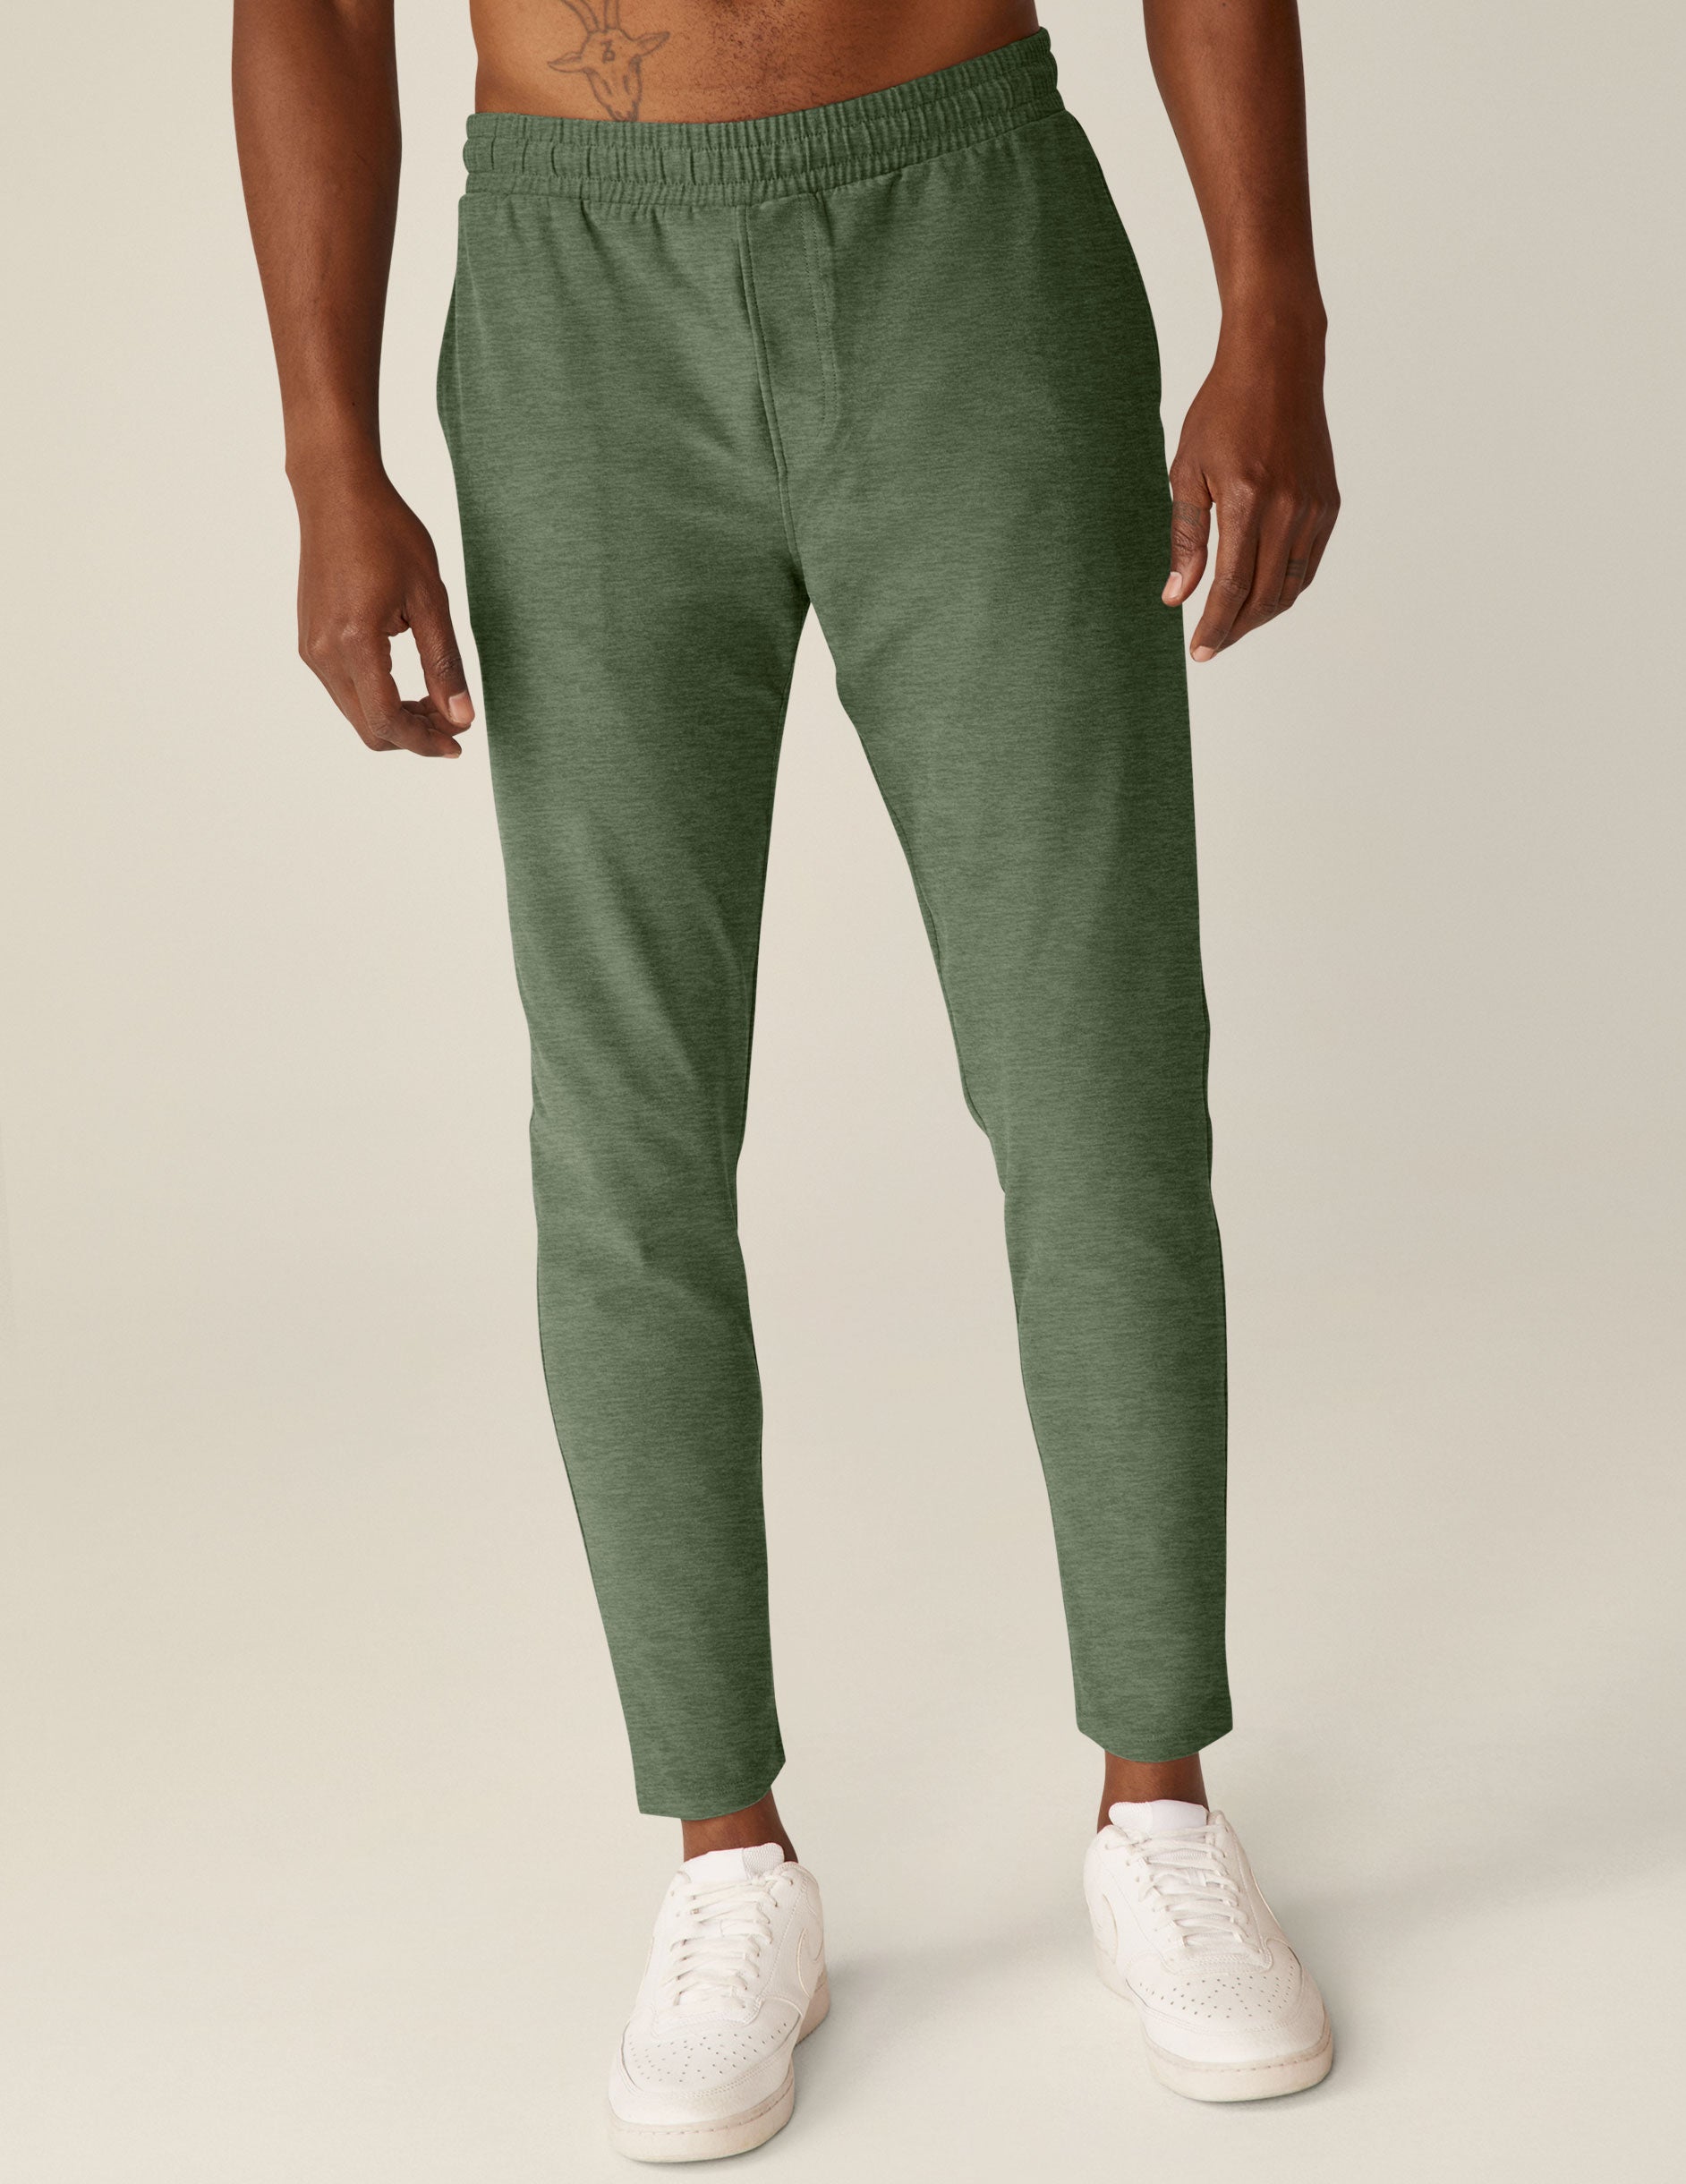 green mens athleisure pants.